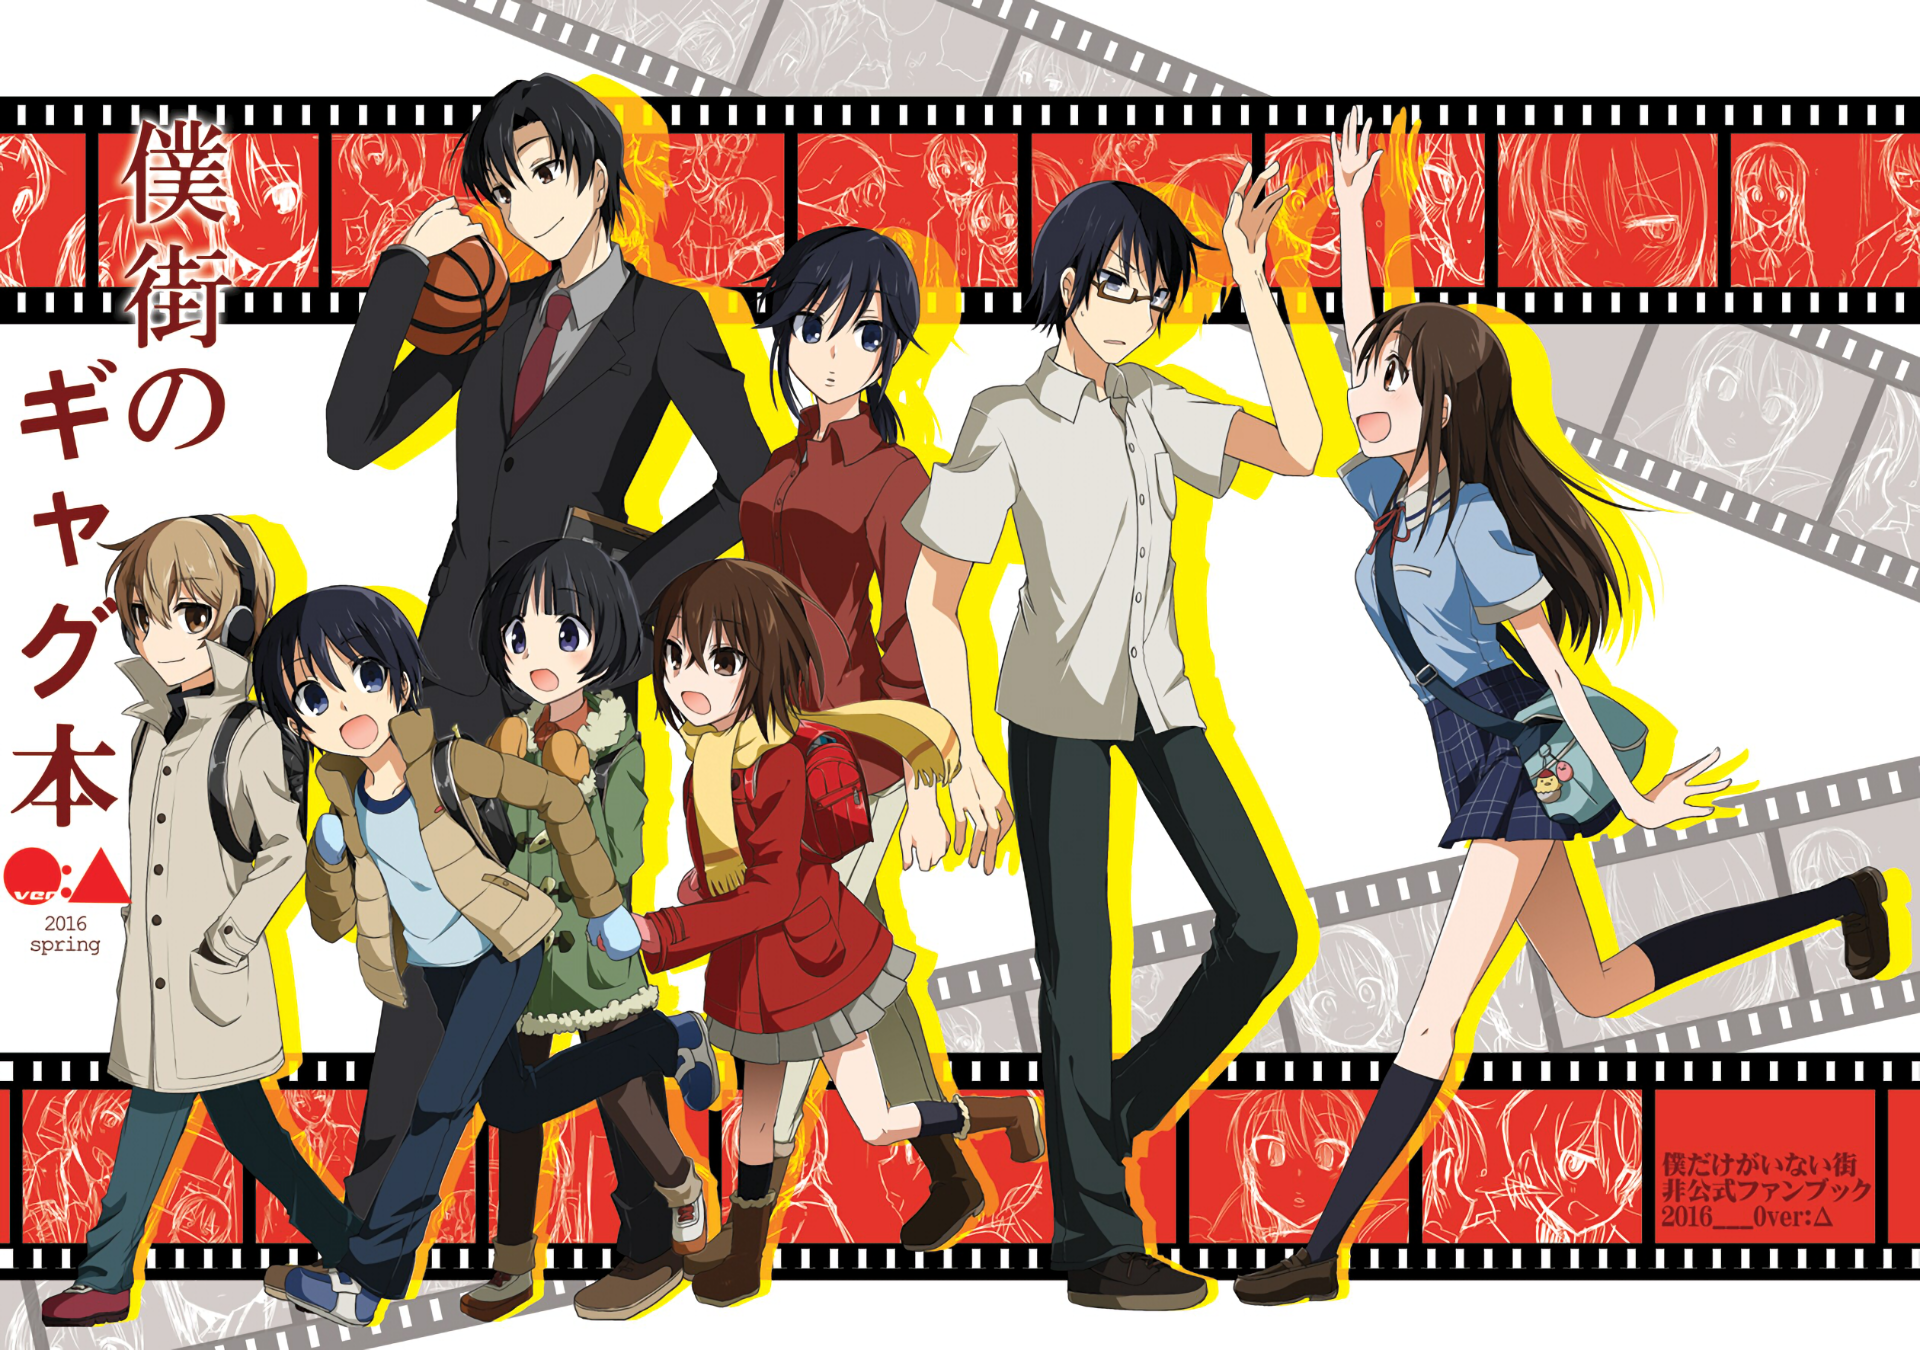 erased anime wallpaper,cartoon,social group,anime,poster,illustration